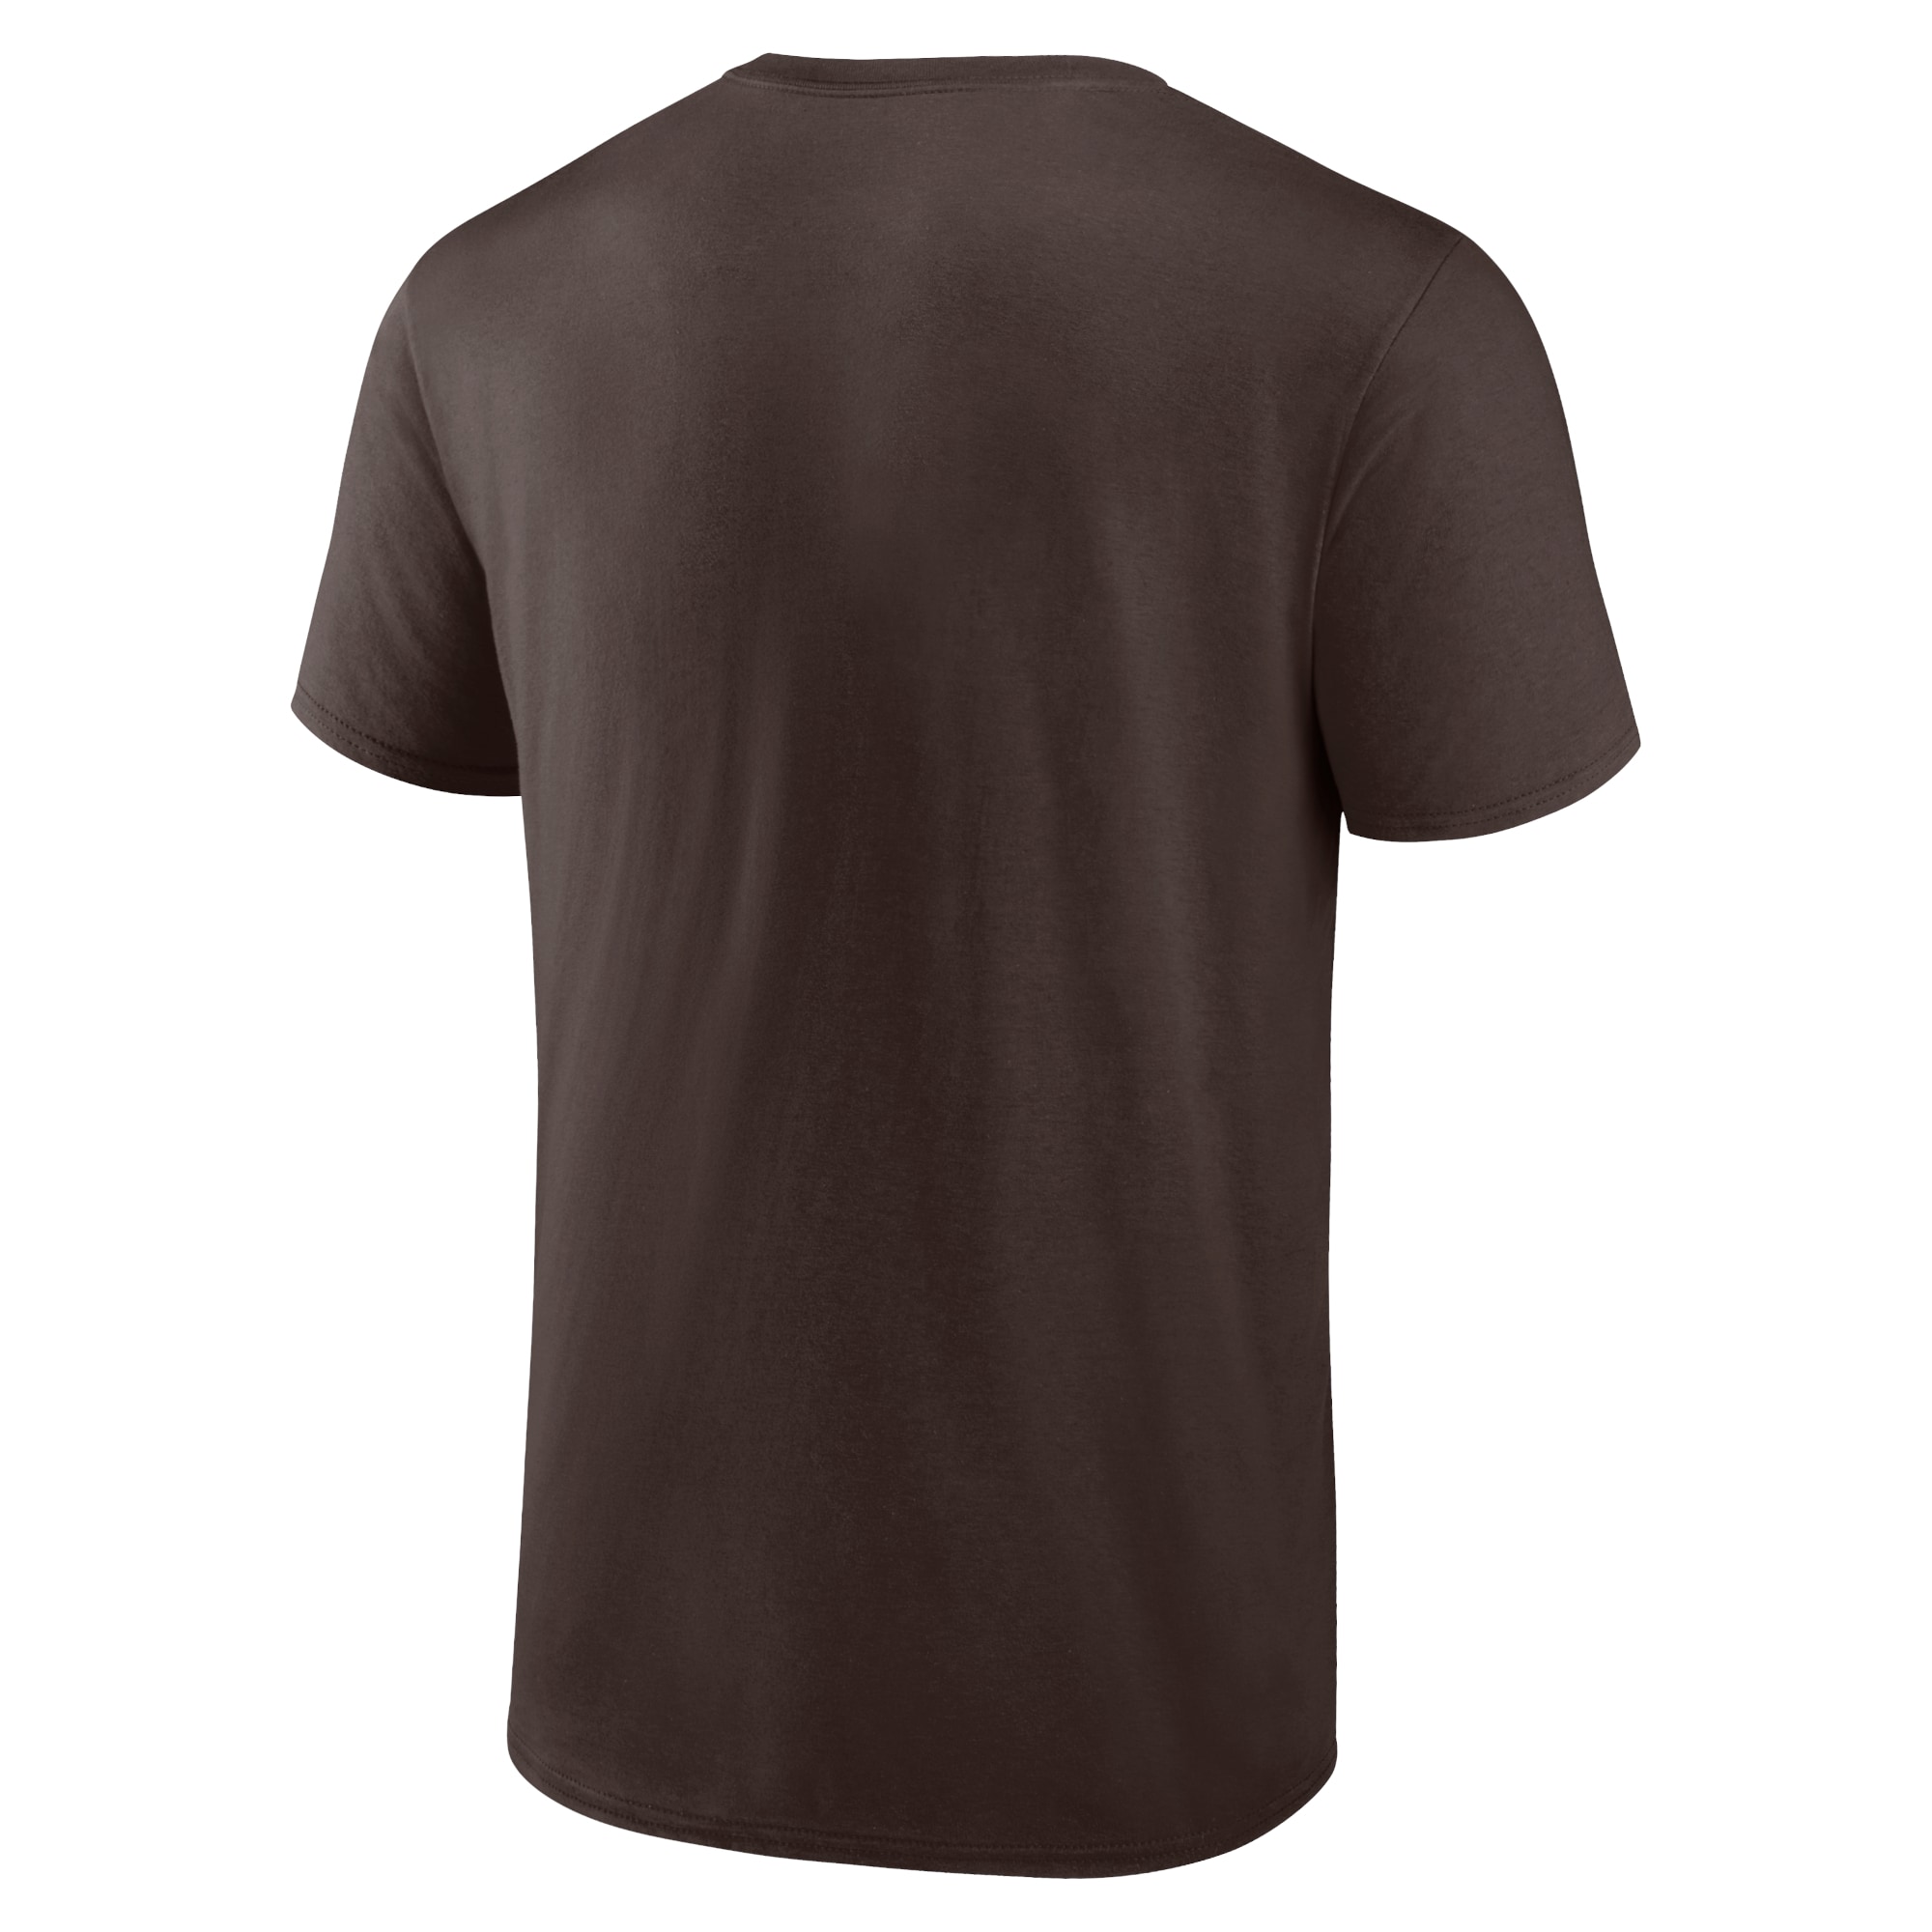 San Diego Padres MLB Big Series Sweep Men's Crew Neck Short Sleeve T-Shirt - image 3 of 3